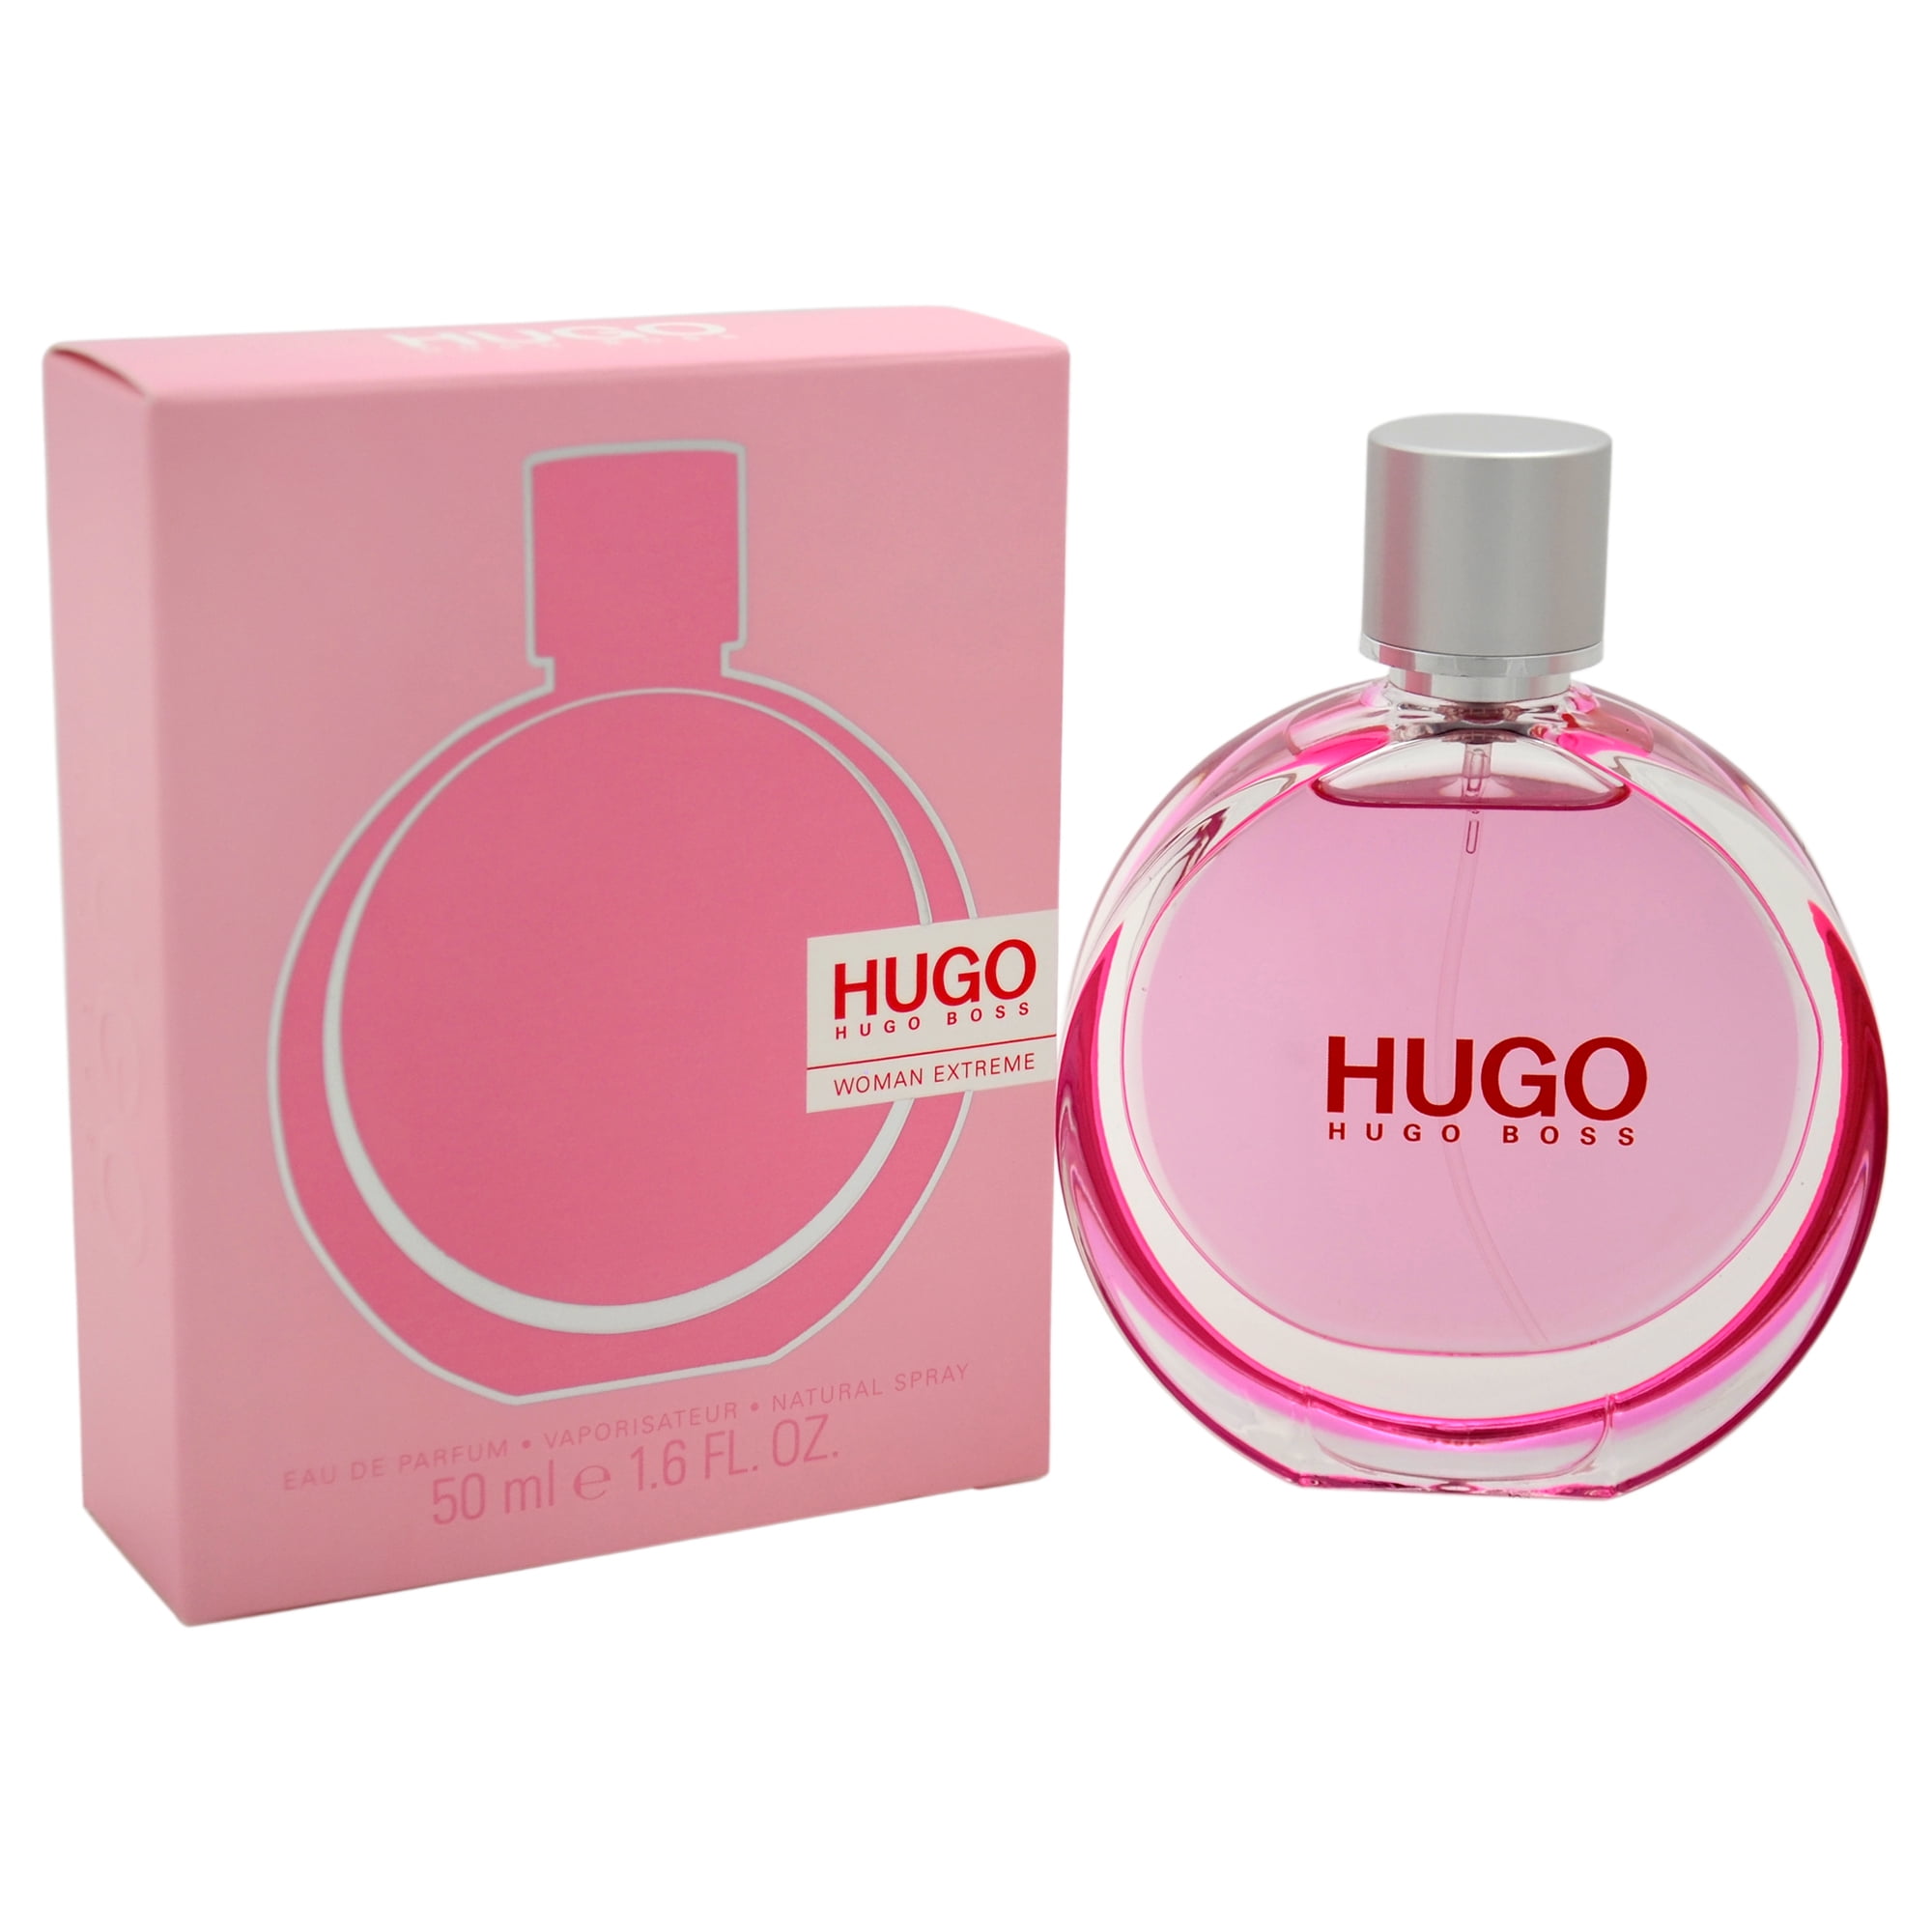 HUGO BOSS Hugo Woman Eau Parfum, Perfume for Women, Oz - Walmart.com